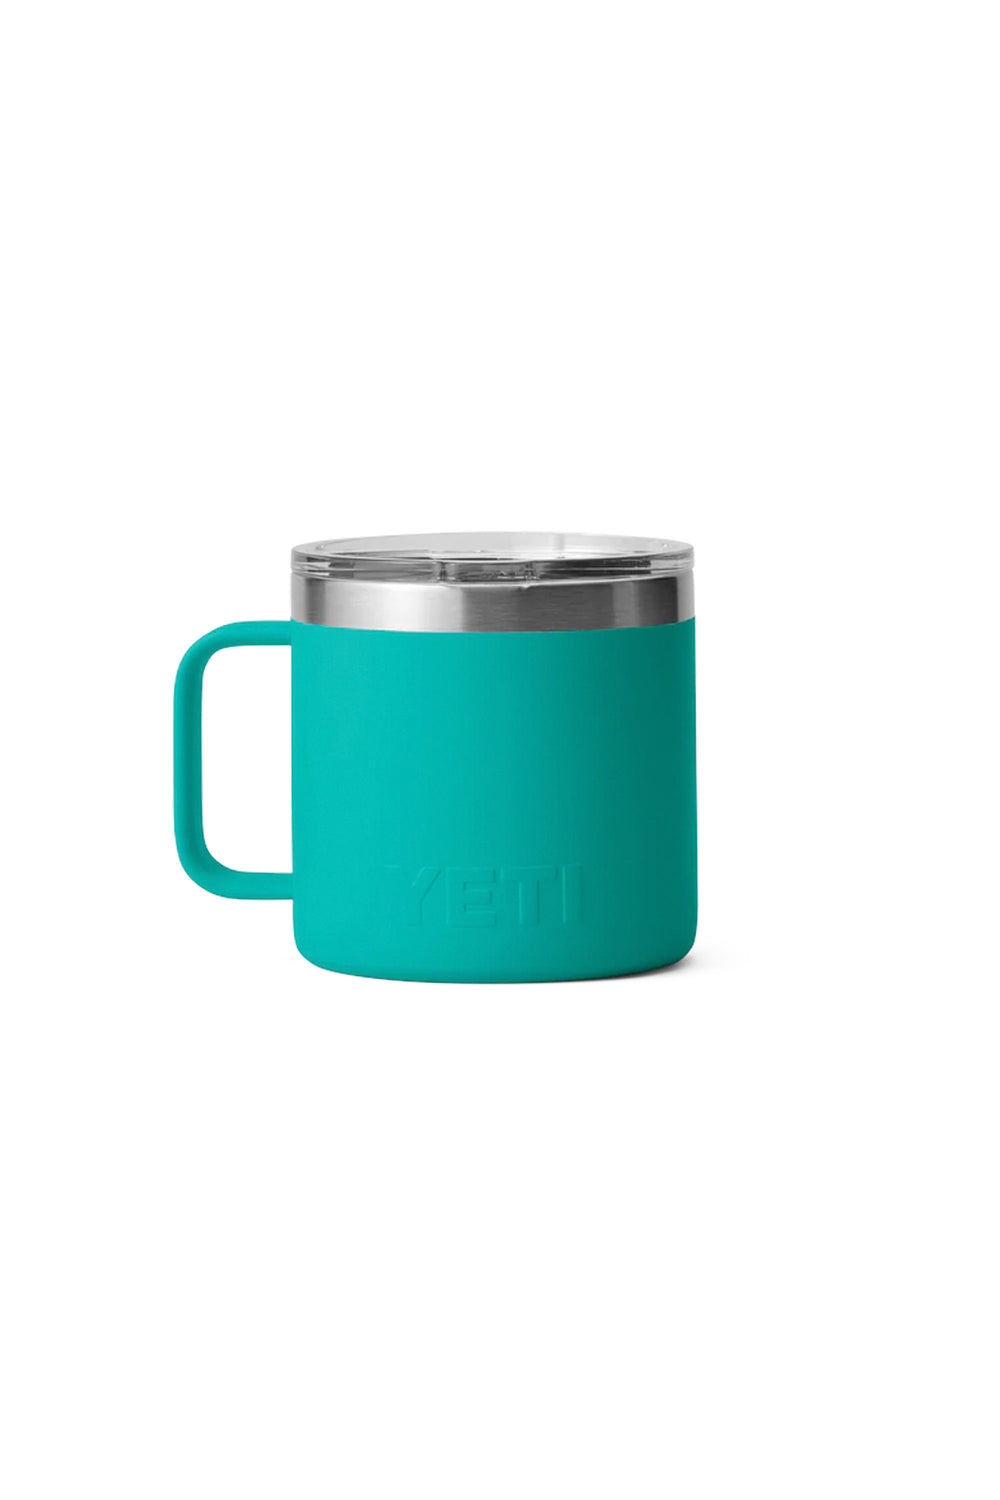 YETI AQUIFER BLUE Rambler 14 oz Mug, Stainless Steel with